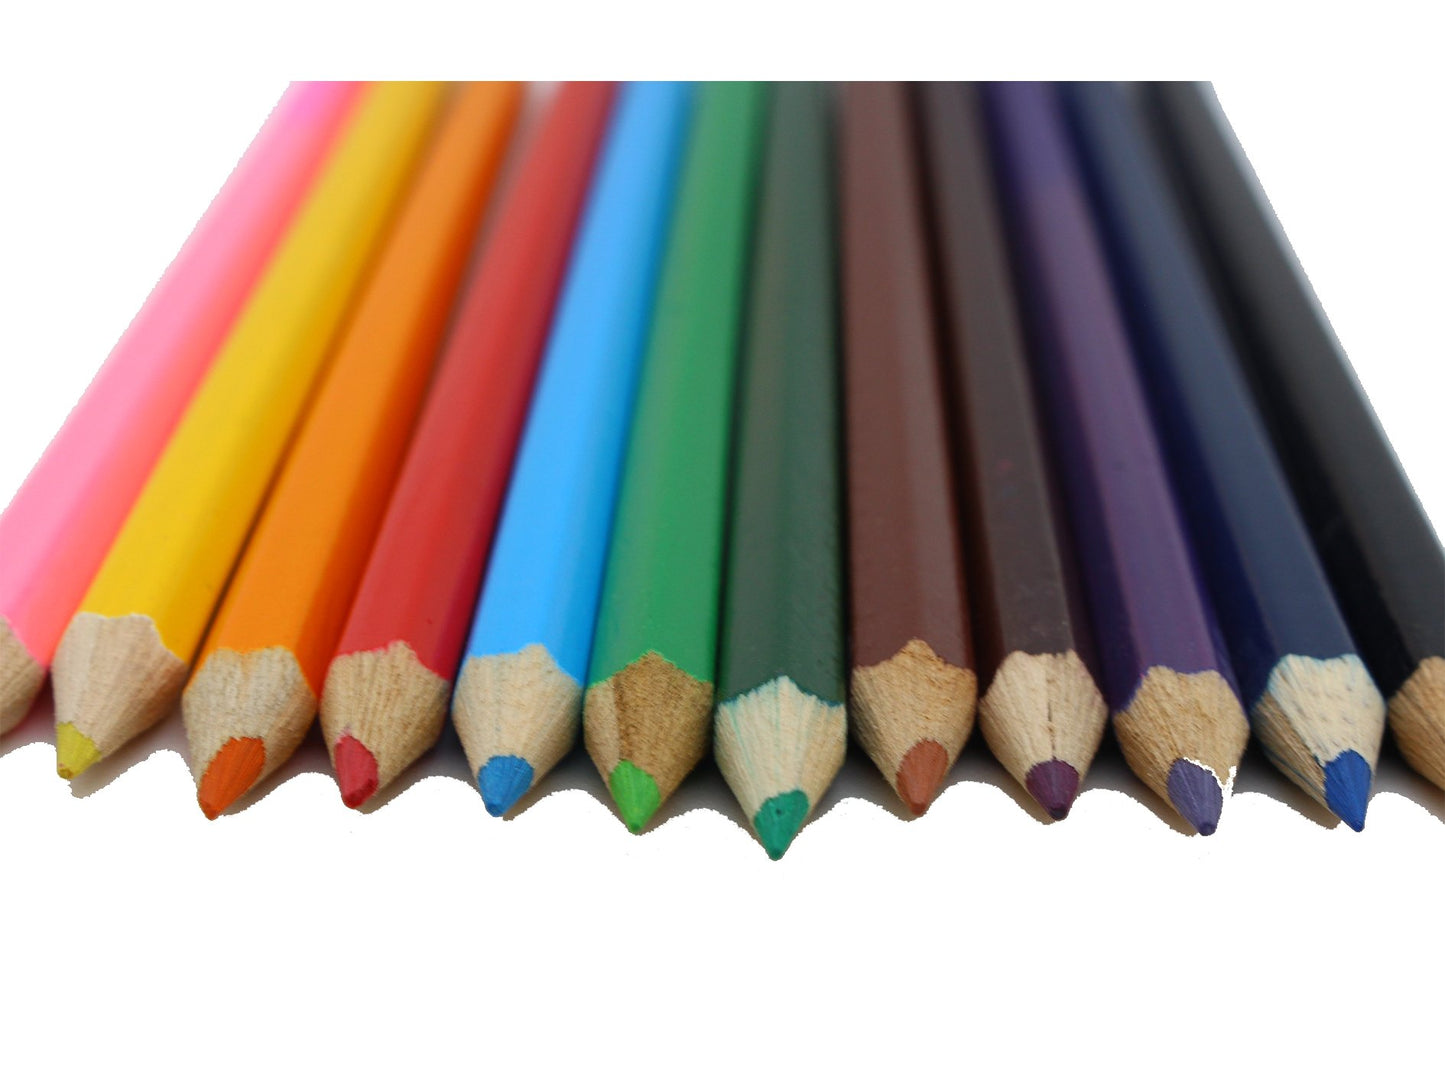 Rainbow 12 Colouring Pencils - VIR Wholesale